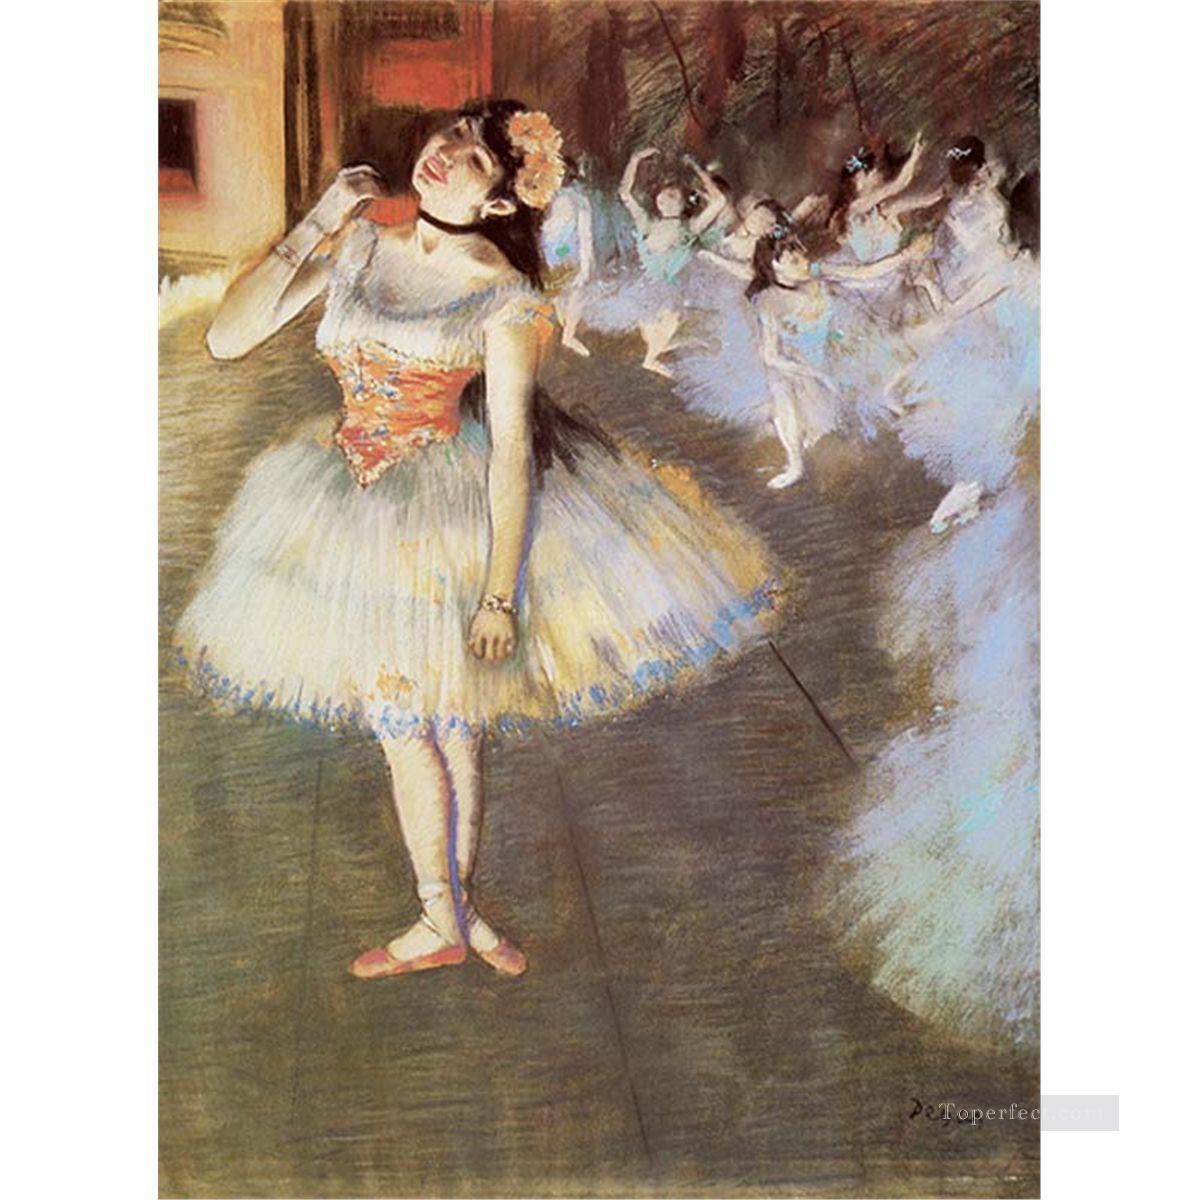 The Star Impressionism ballet dancer Edgar Degas Oil Paintings